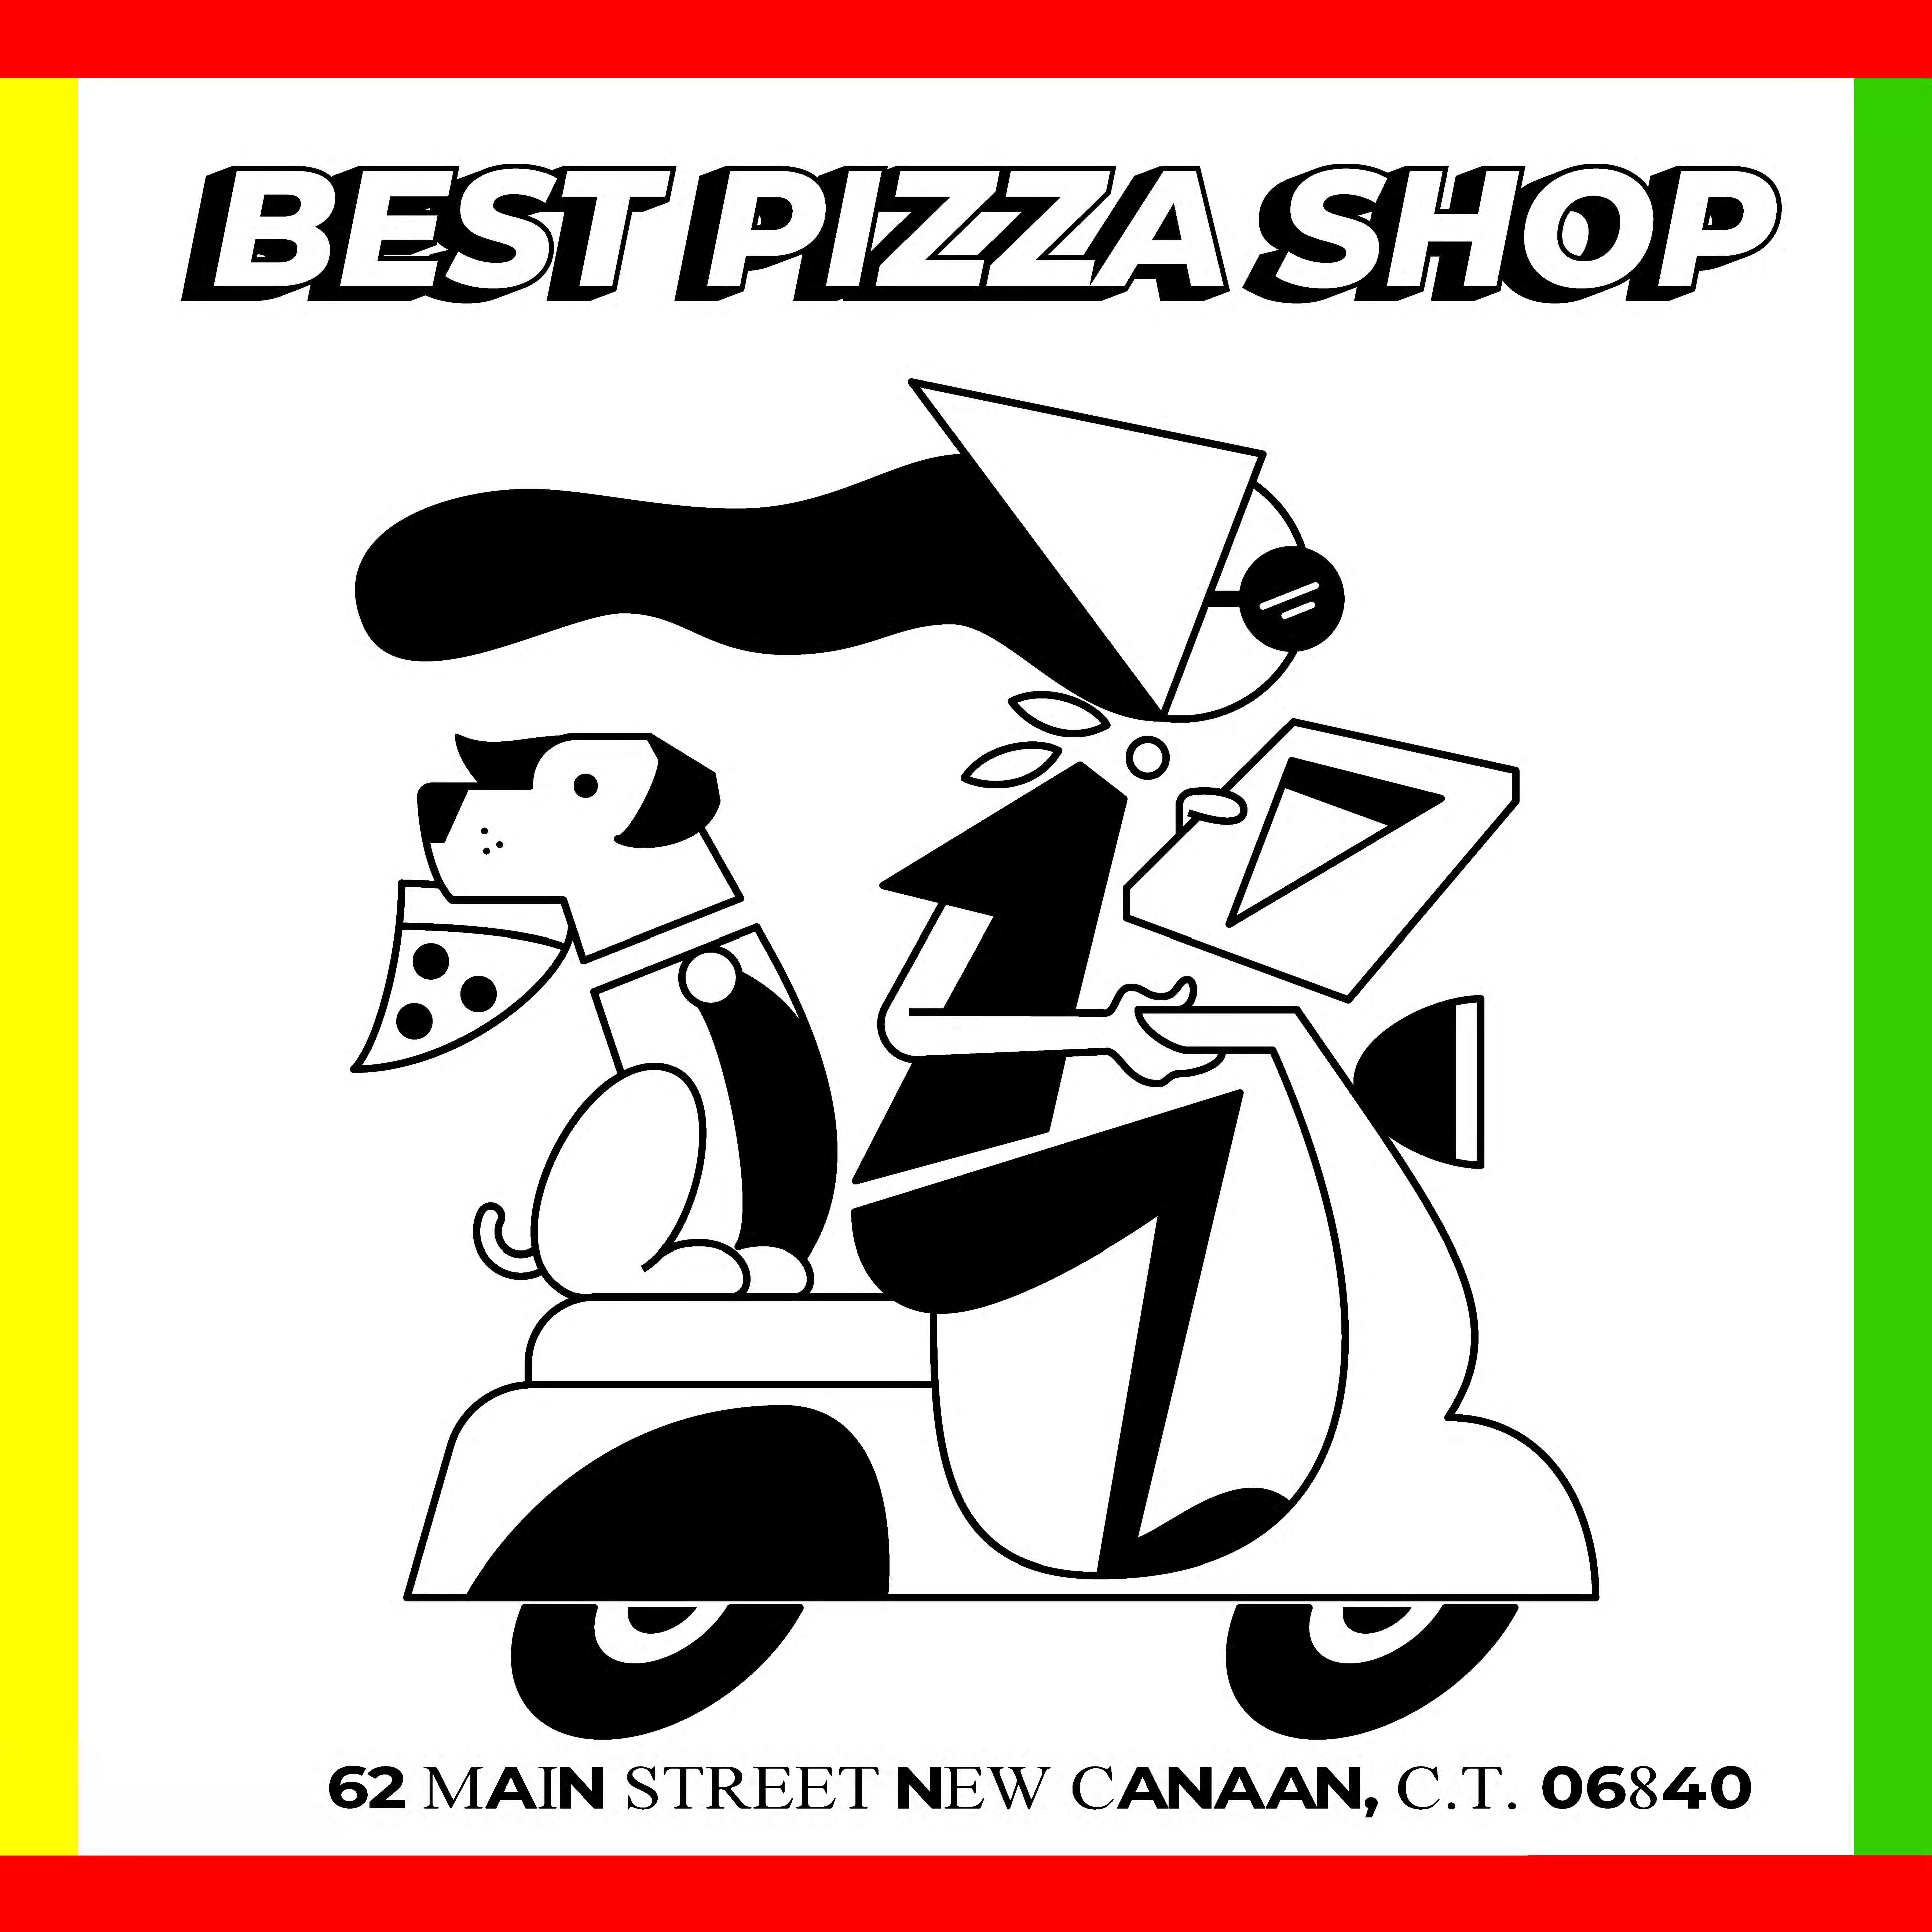 Gastroteca Astoria - Best Pizza shop Home